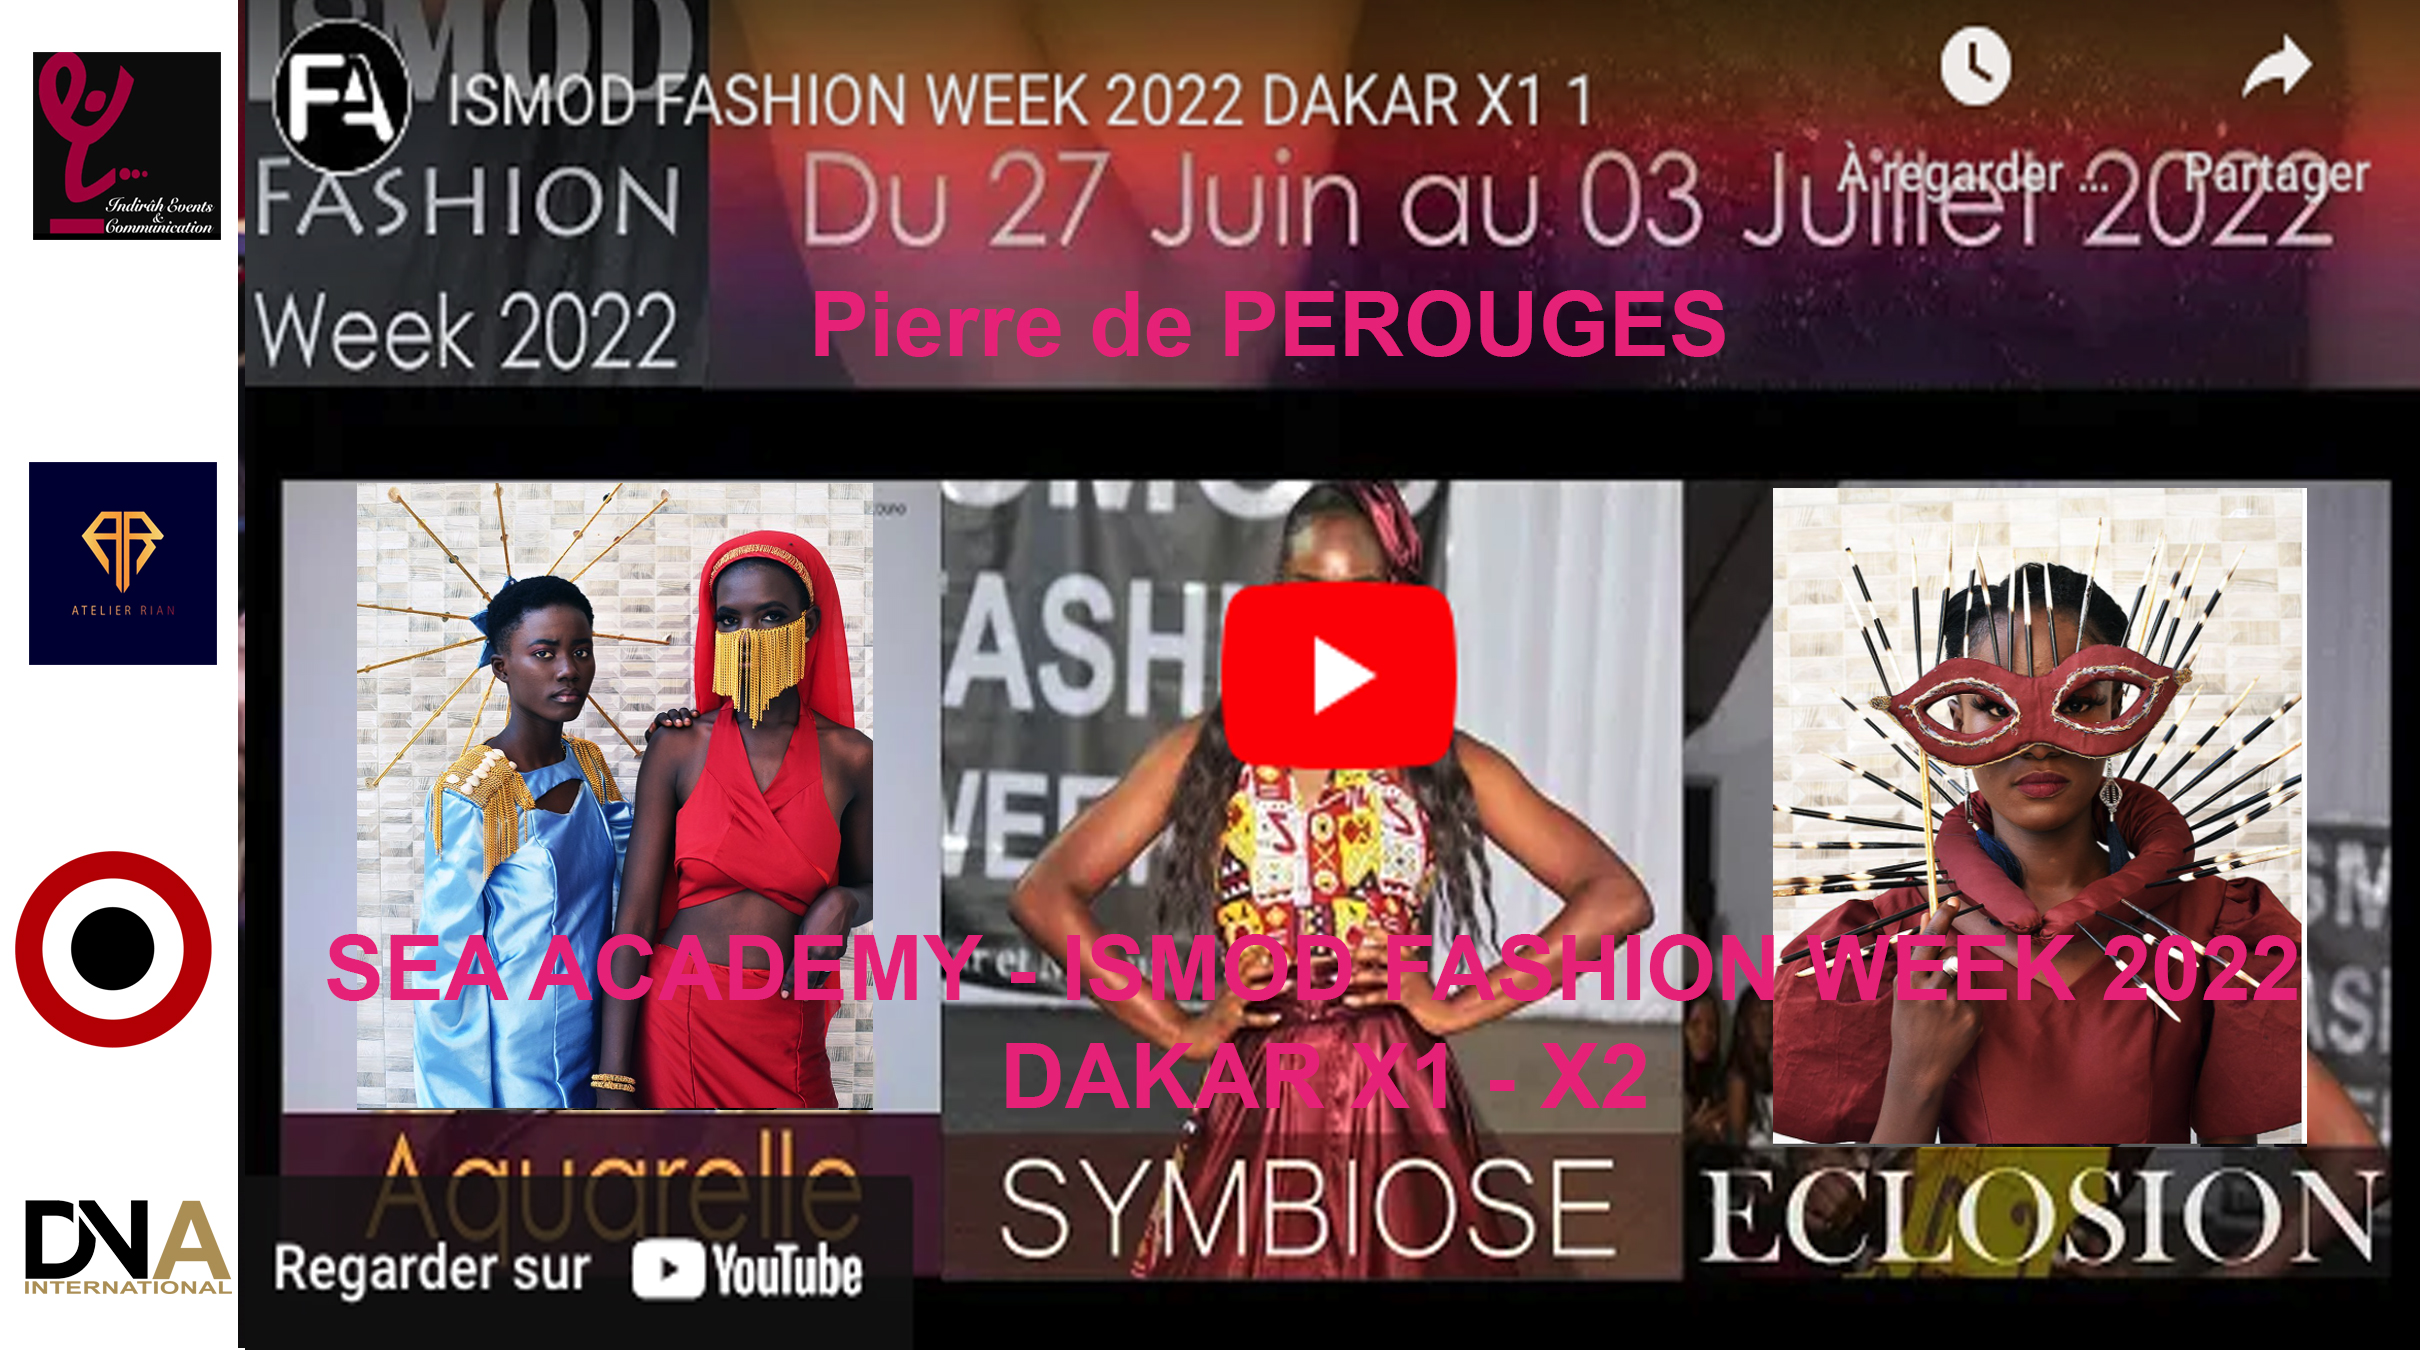 AFRICA-VOGUE-COVER-SEA-ACADEMY-ISMOD-FASHION-WEEK-2022-DAKAR-X2-1-DN-AFRICA-Media-Partner